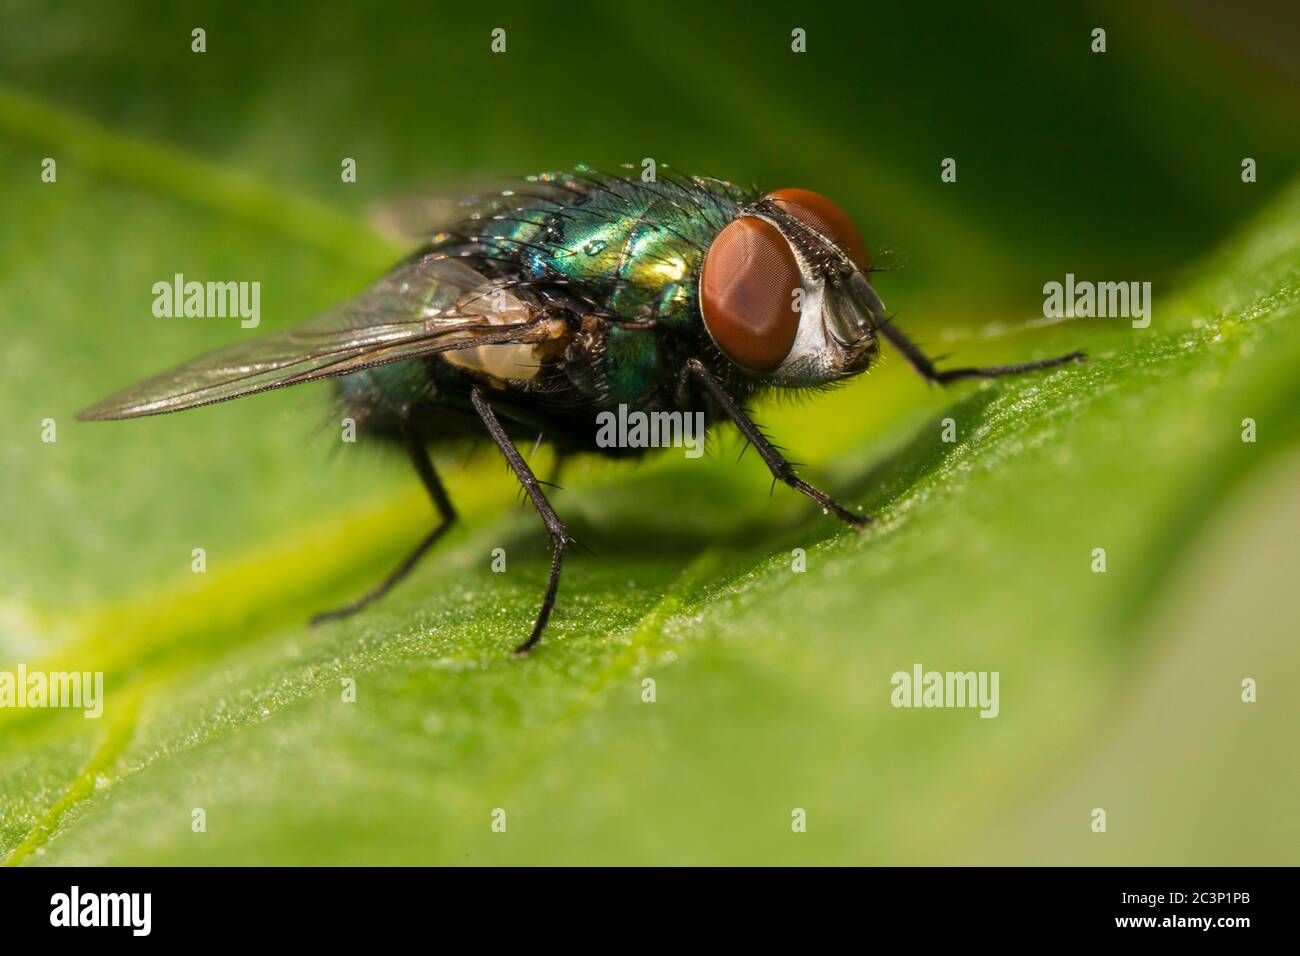 The common green bottle fly (Lucilia sericata) Stock Photo